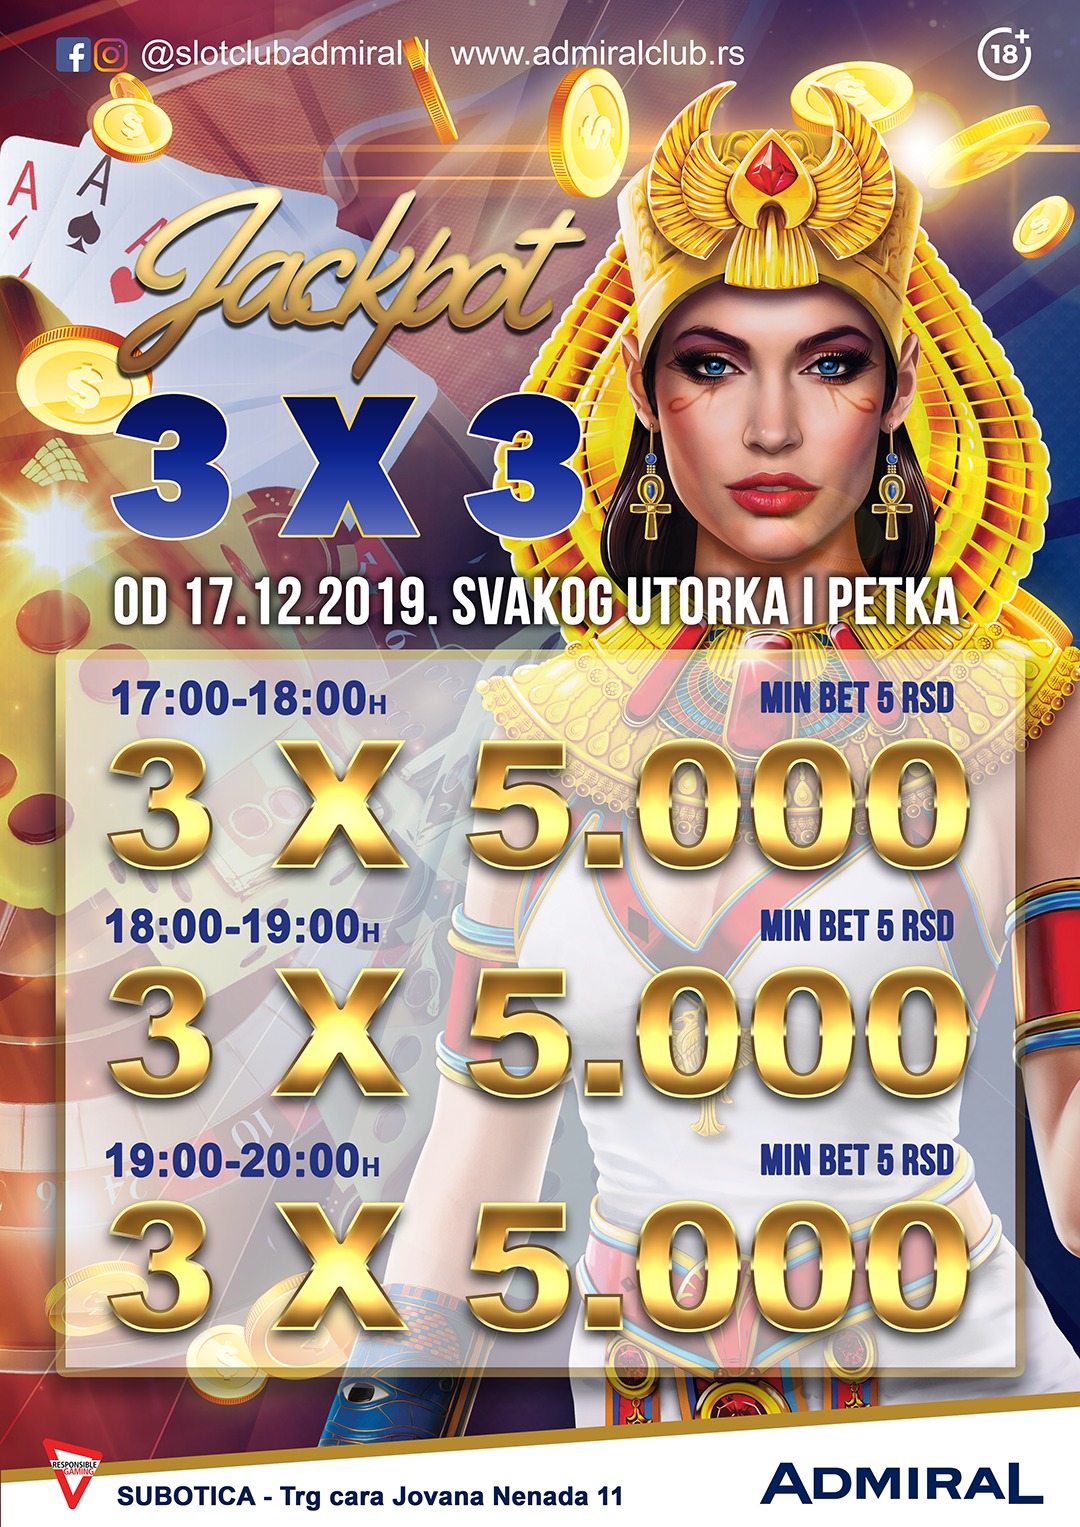 3 X 3 jackpot – Subotica